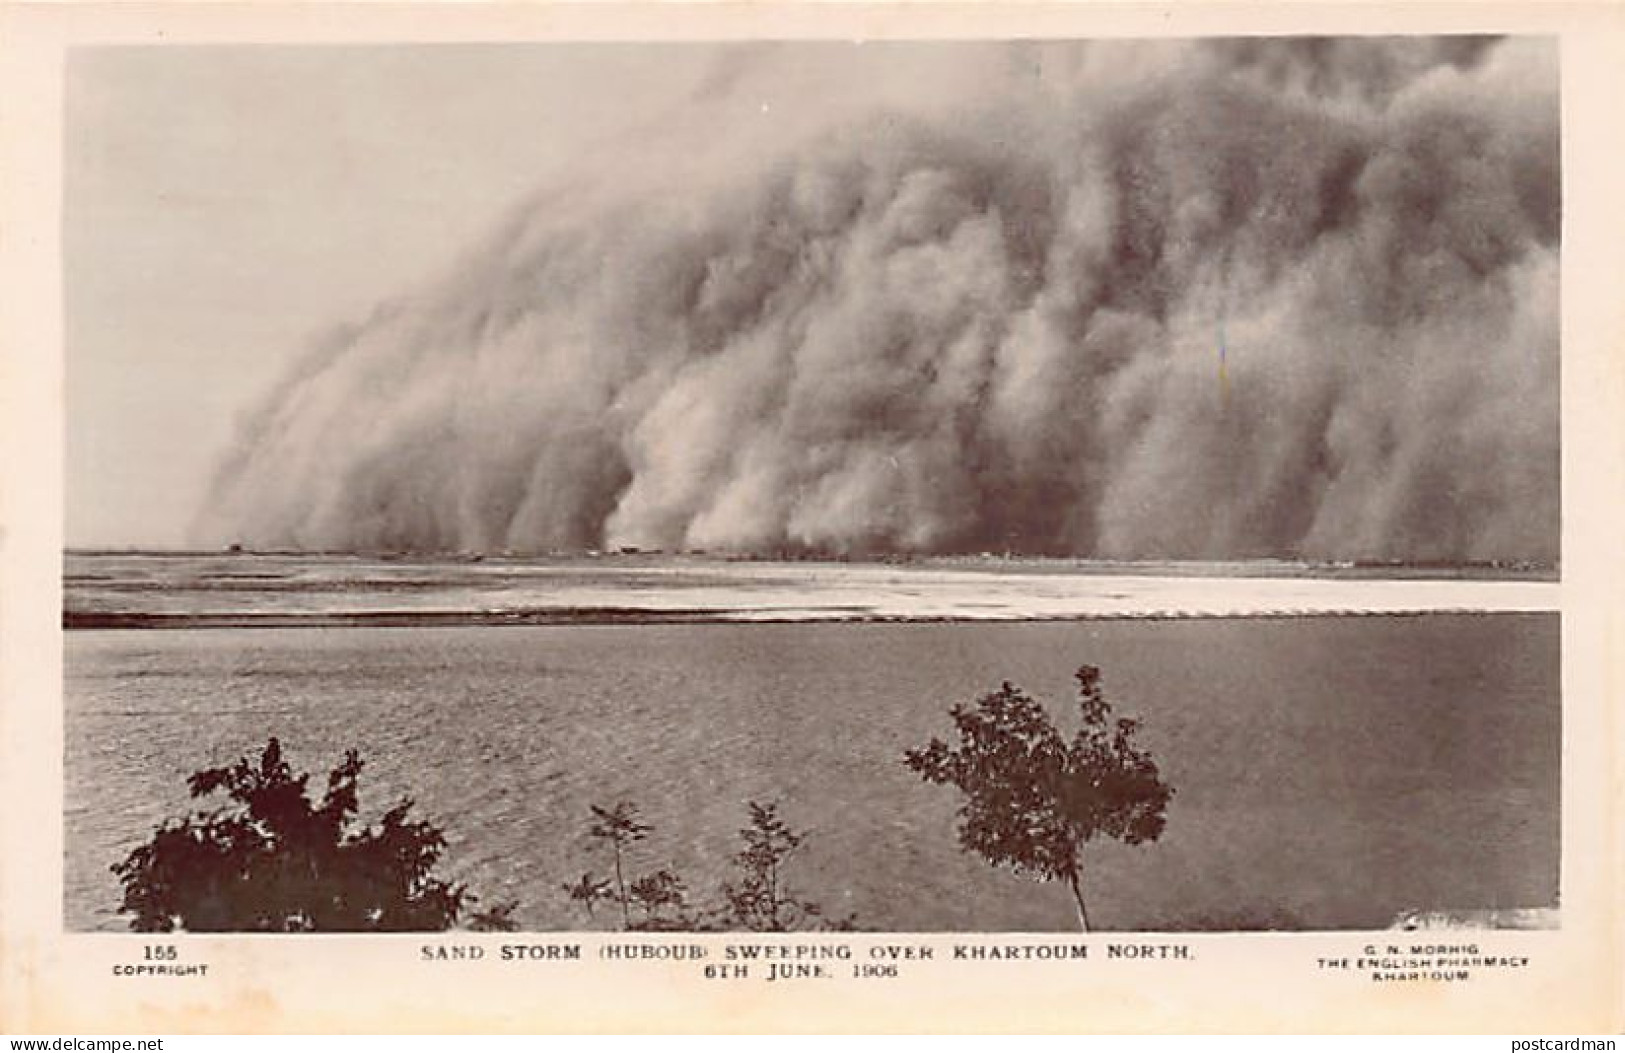 Sudan - Sand Storm Sweeping Over Khartoum North, 6th June 1906 - REAL PHOTO Publ. G. N. Mohring 155 - Soudan